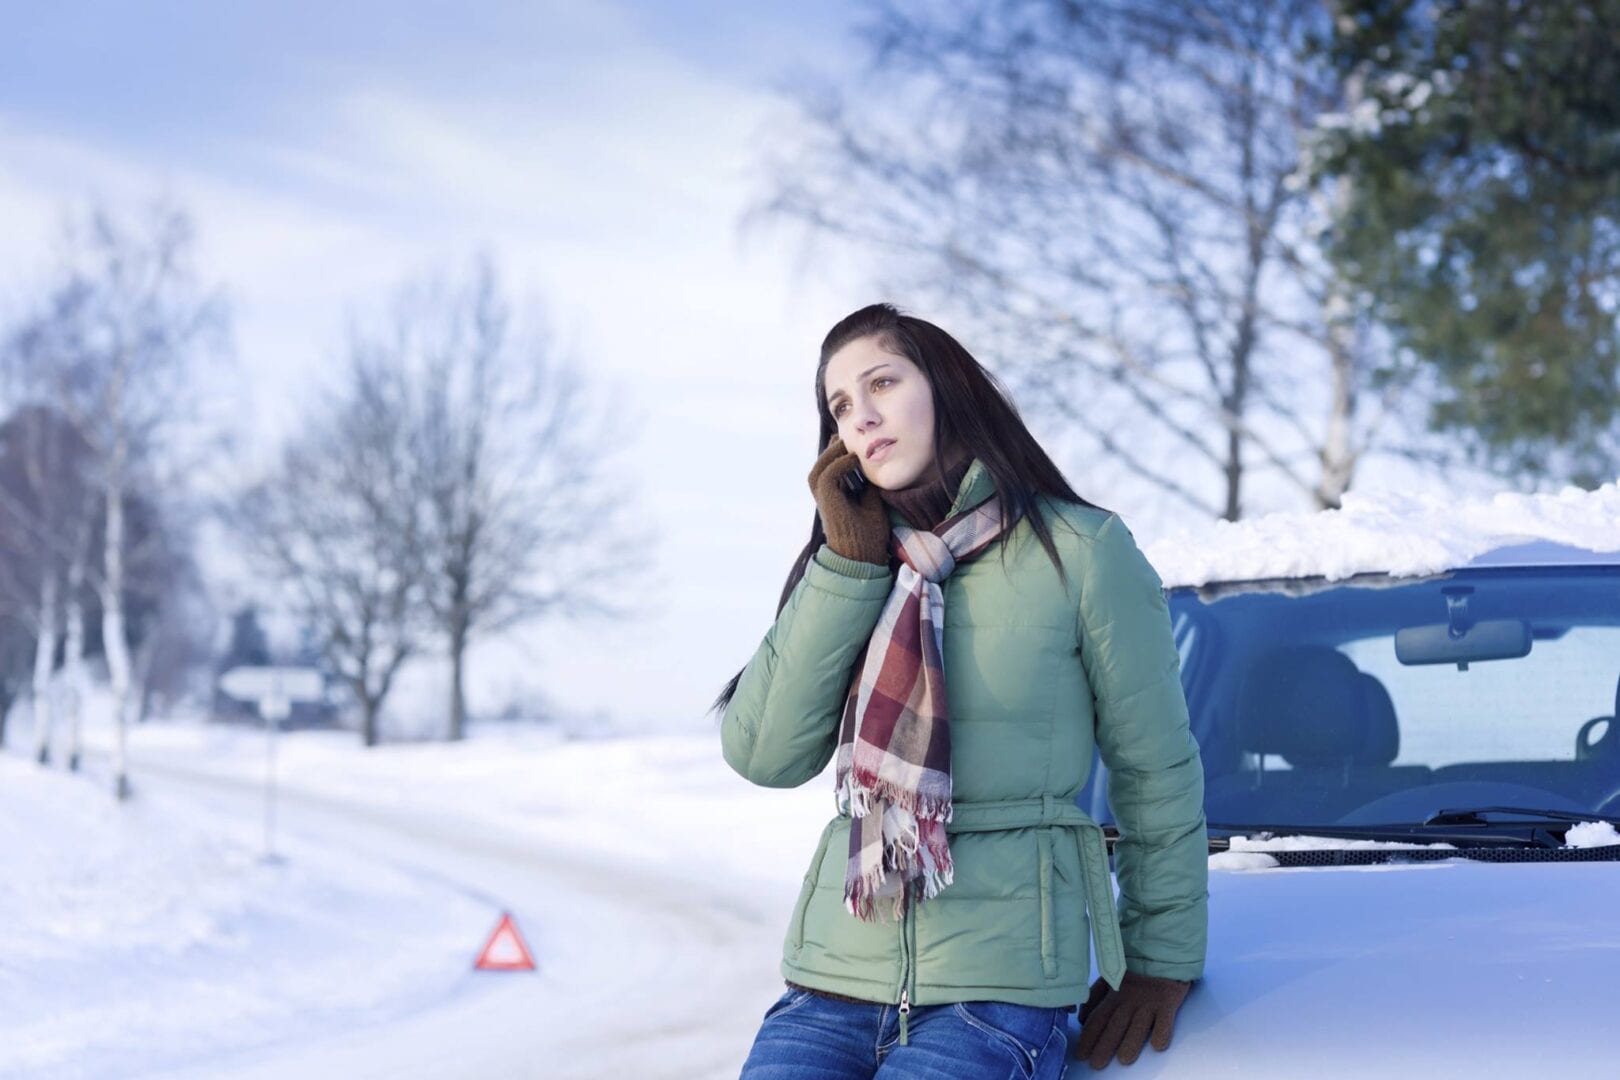 Winter driving checklist - be careful